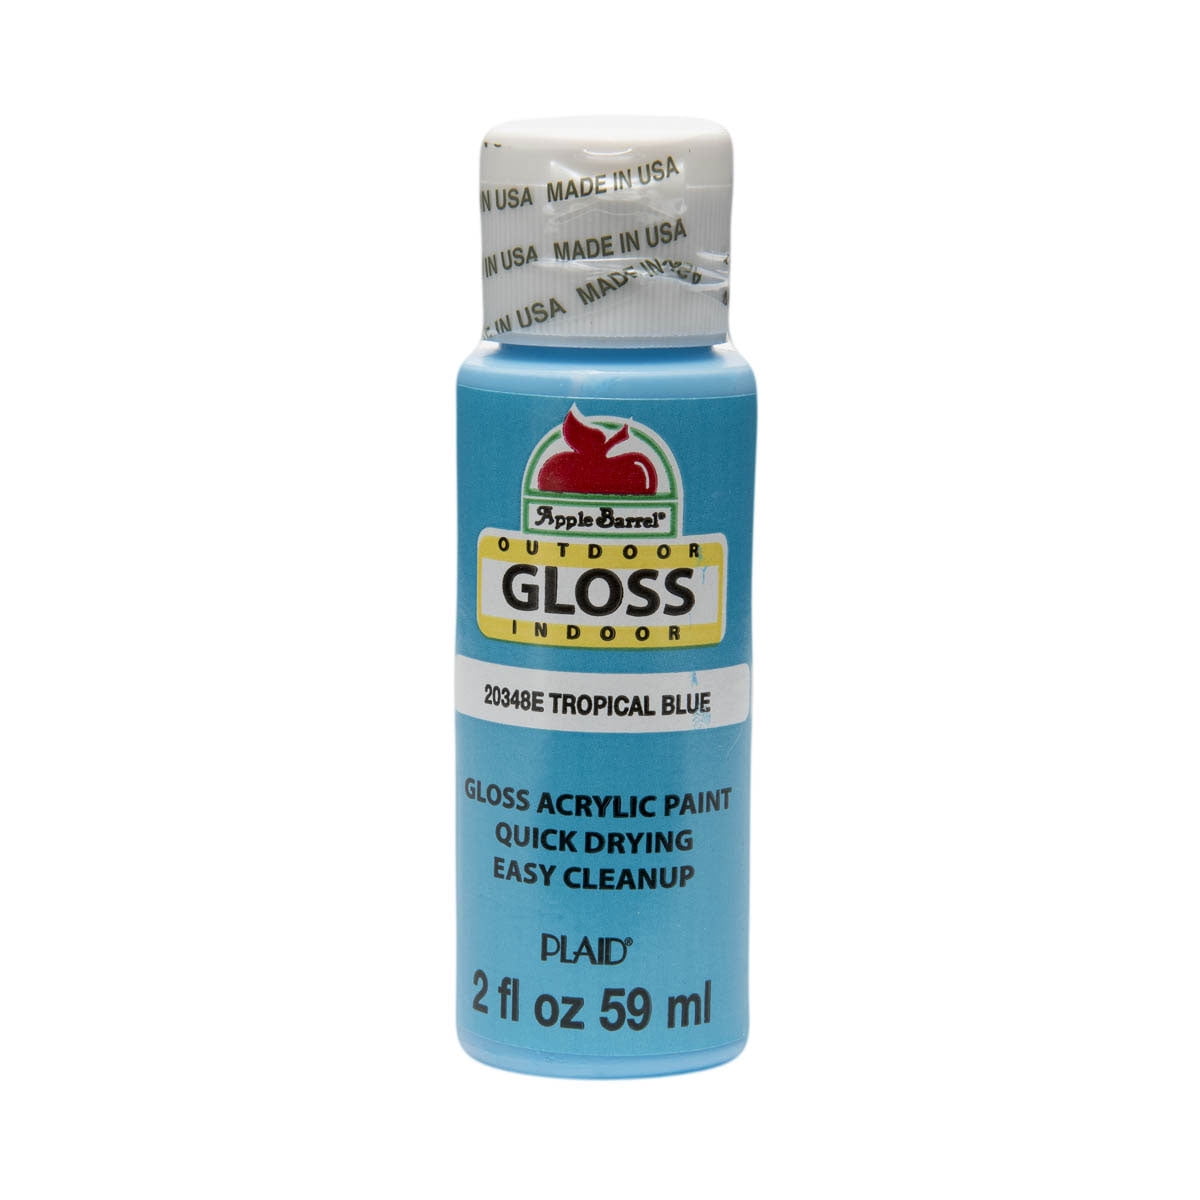 Glossy finish. Краска акриловая " finish Premium" рав 7047. Acrylic Gloss Varnish состав. Gloss Paint.